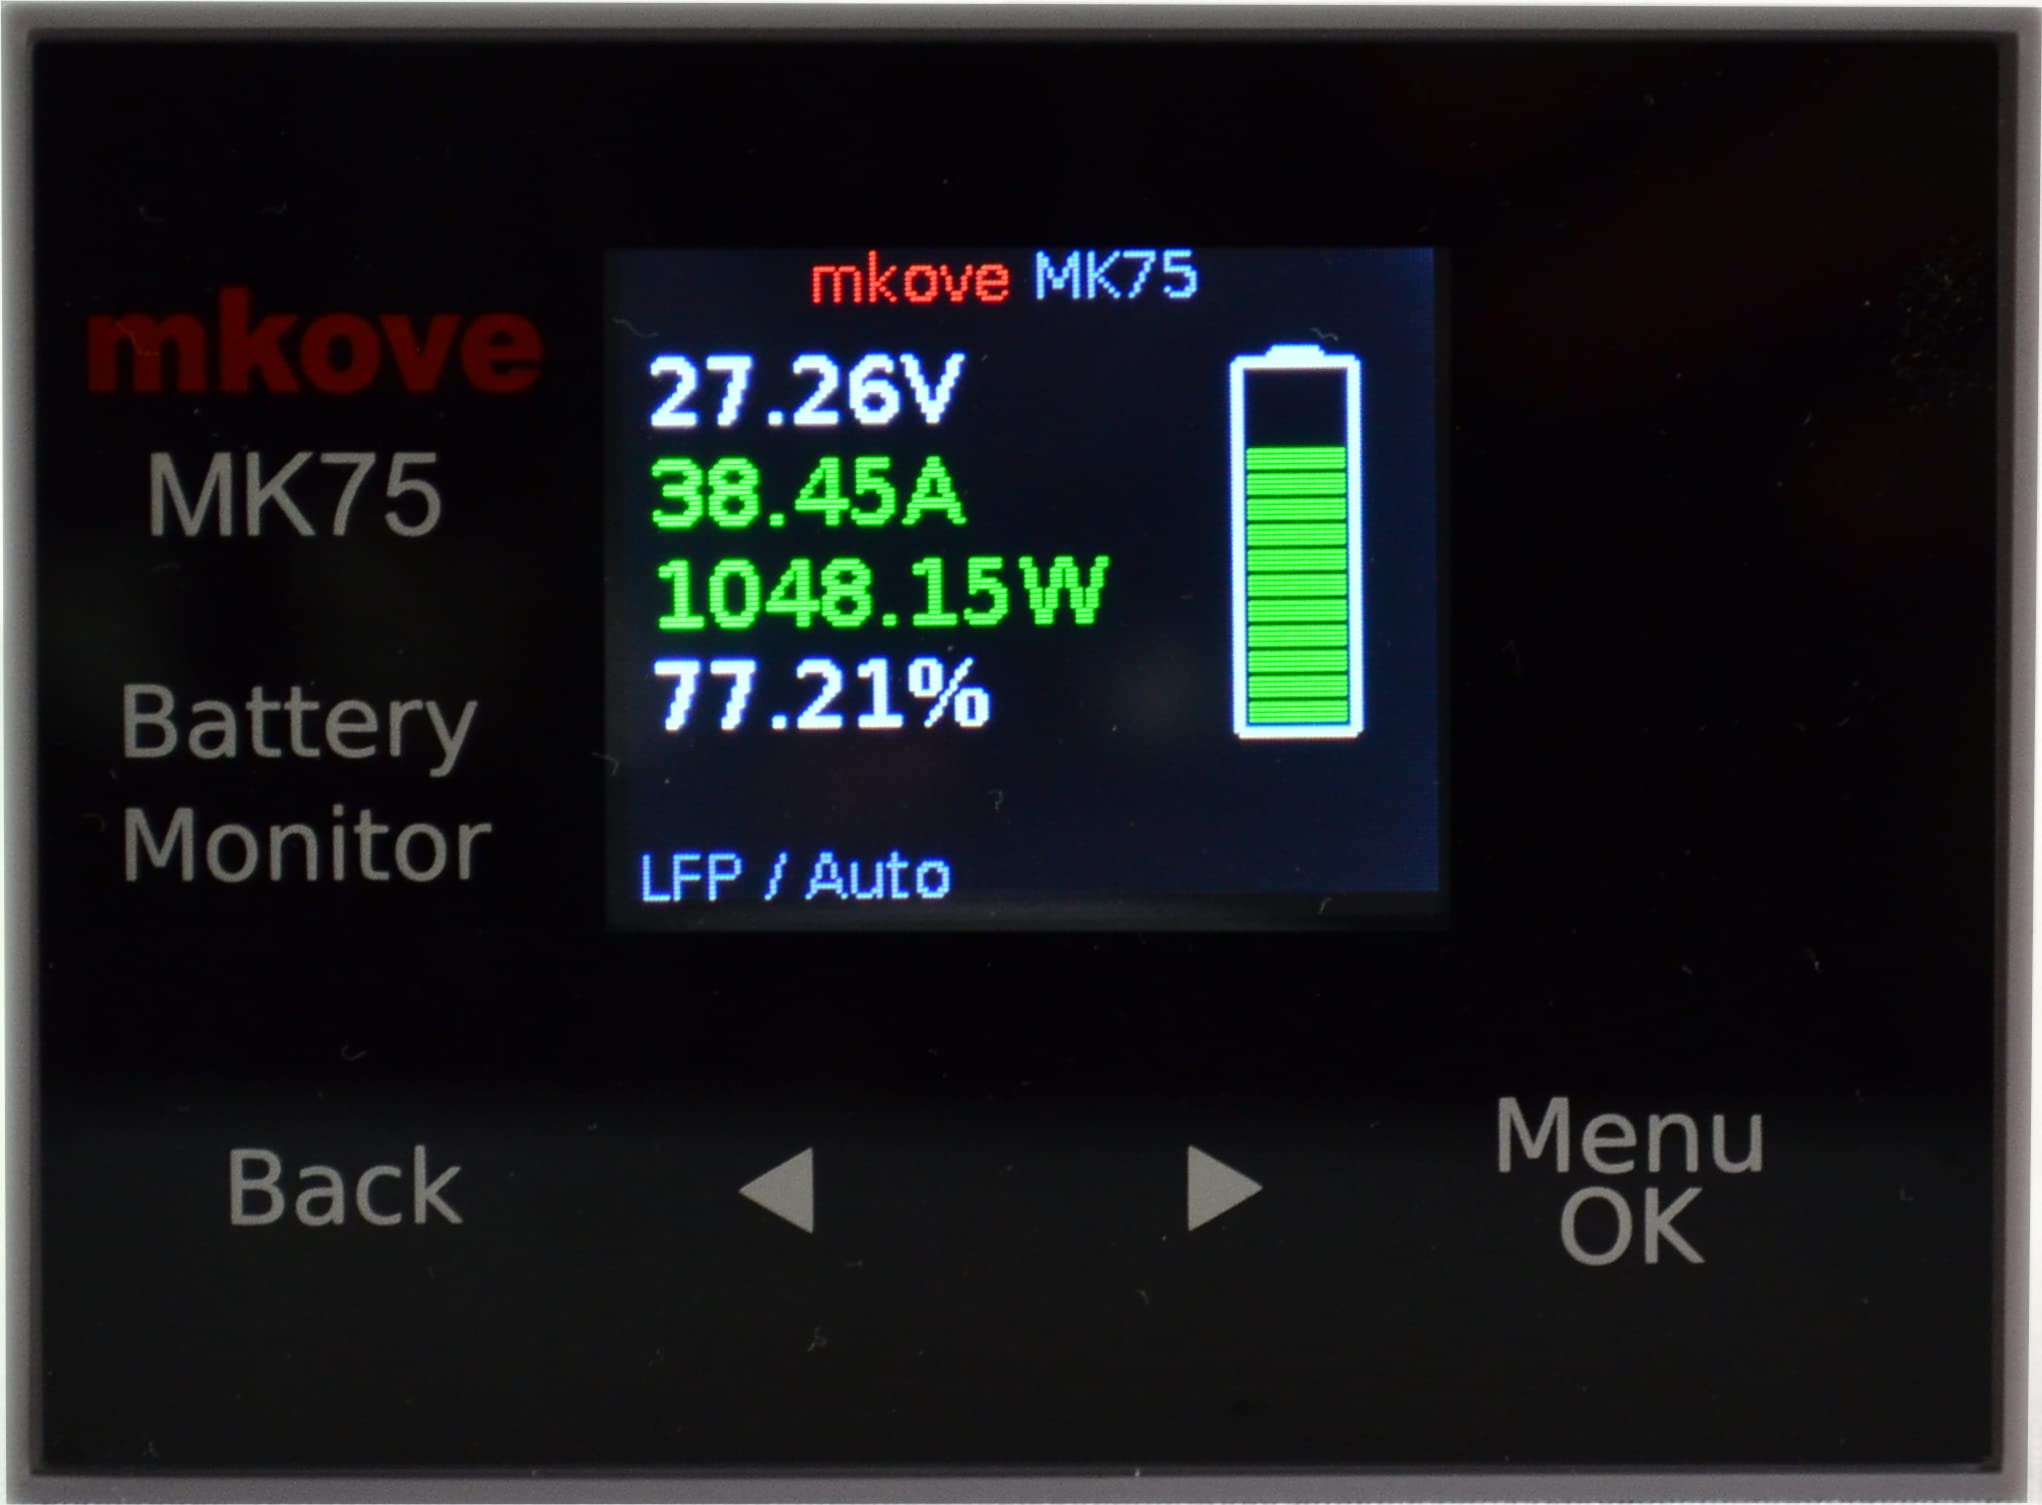 Mkove MK75 WiFi Battery Monitor